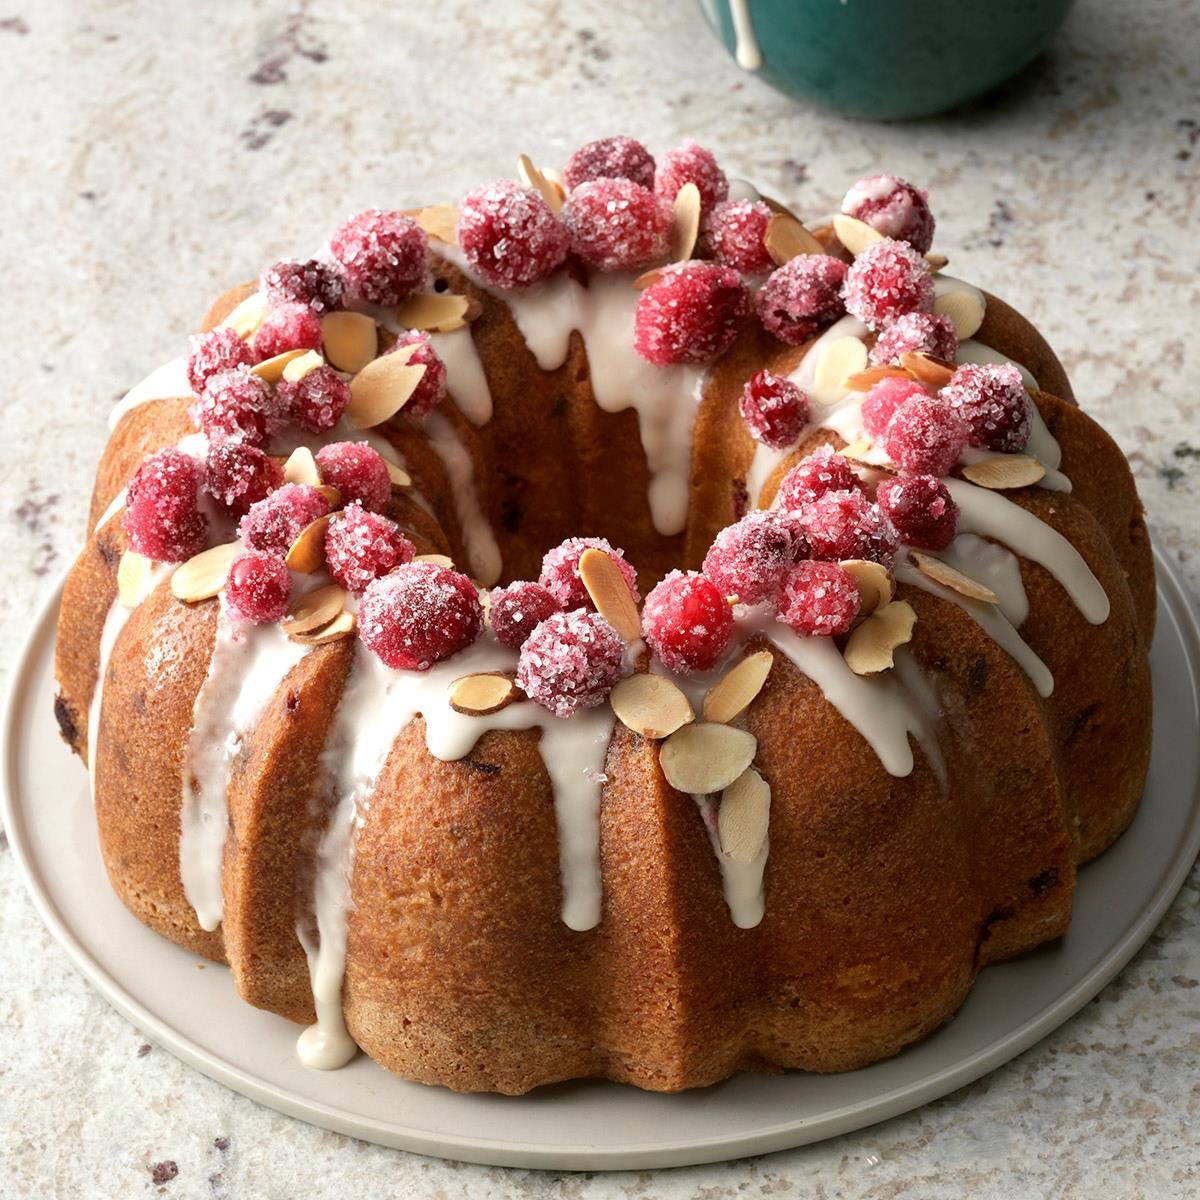 Lemon-Blueberry Pound Cake Recipe: How to Make It